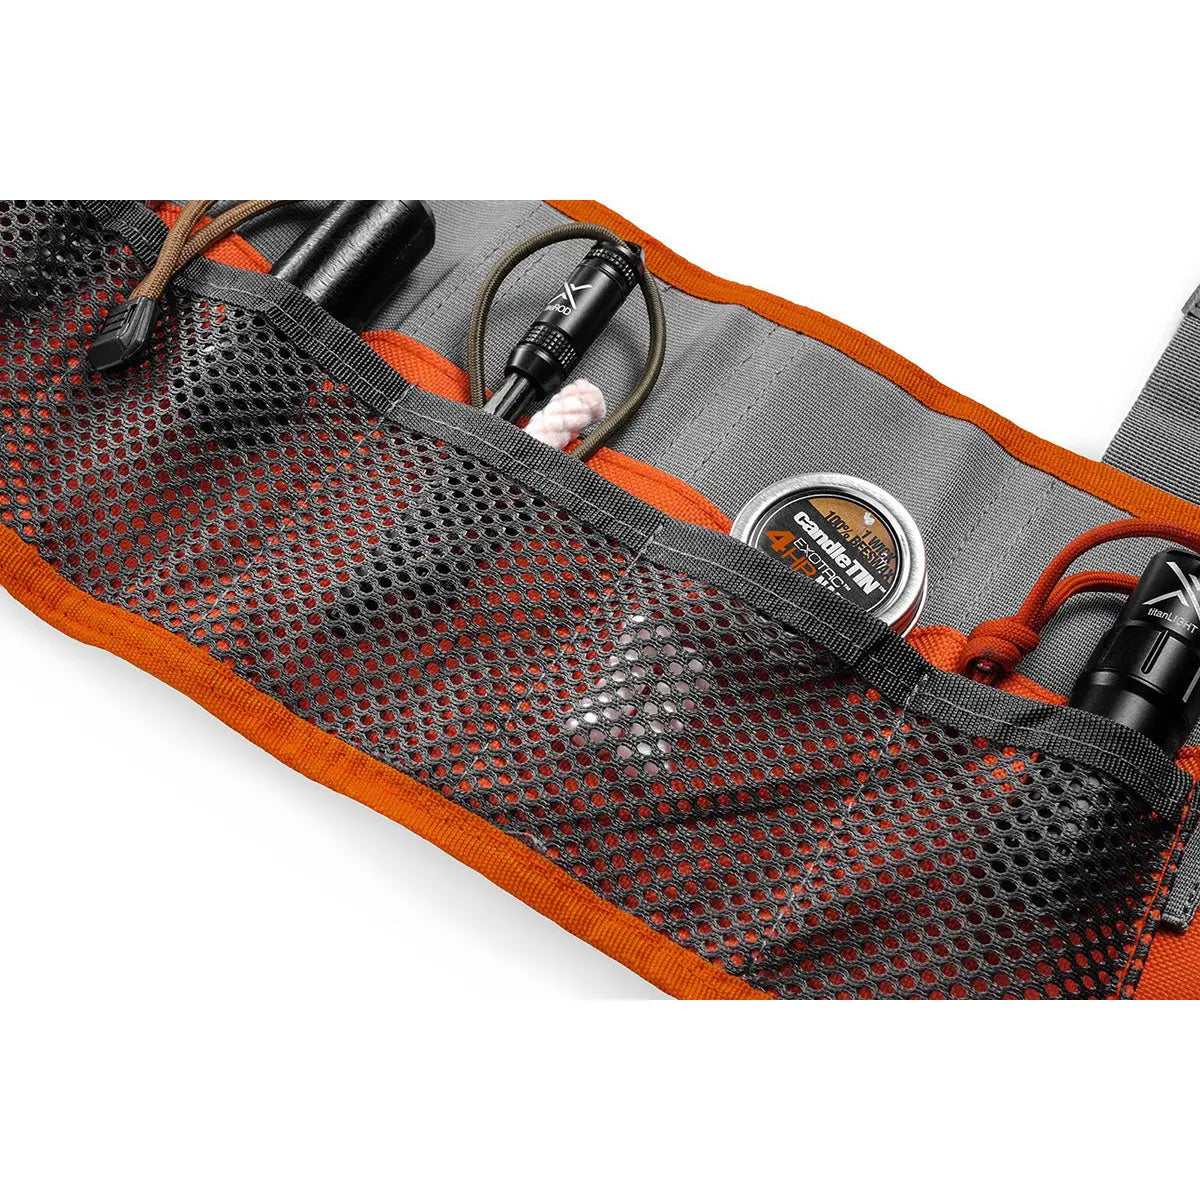 Exotac toolROLL Fire Starter Gear Carrier - Black/Orange Exotac